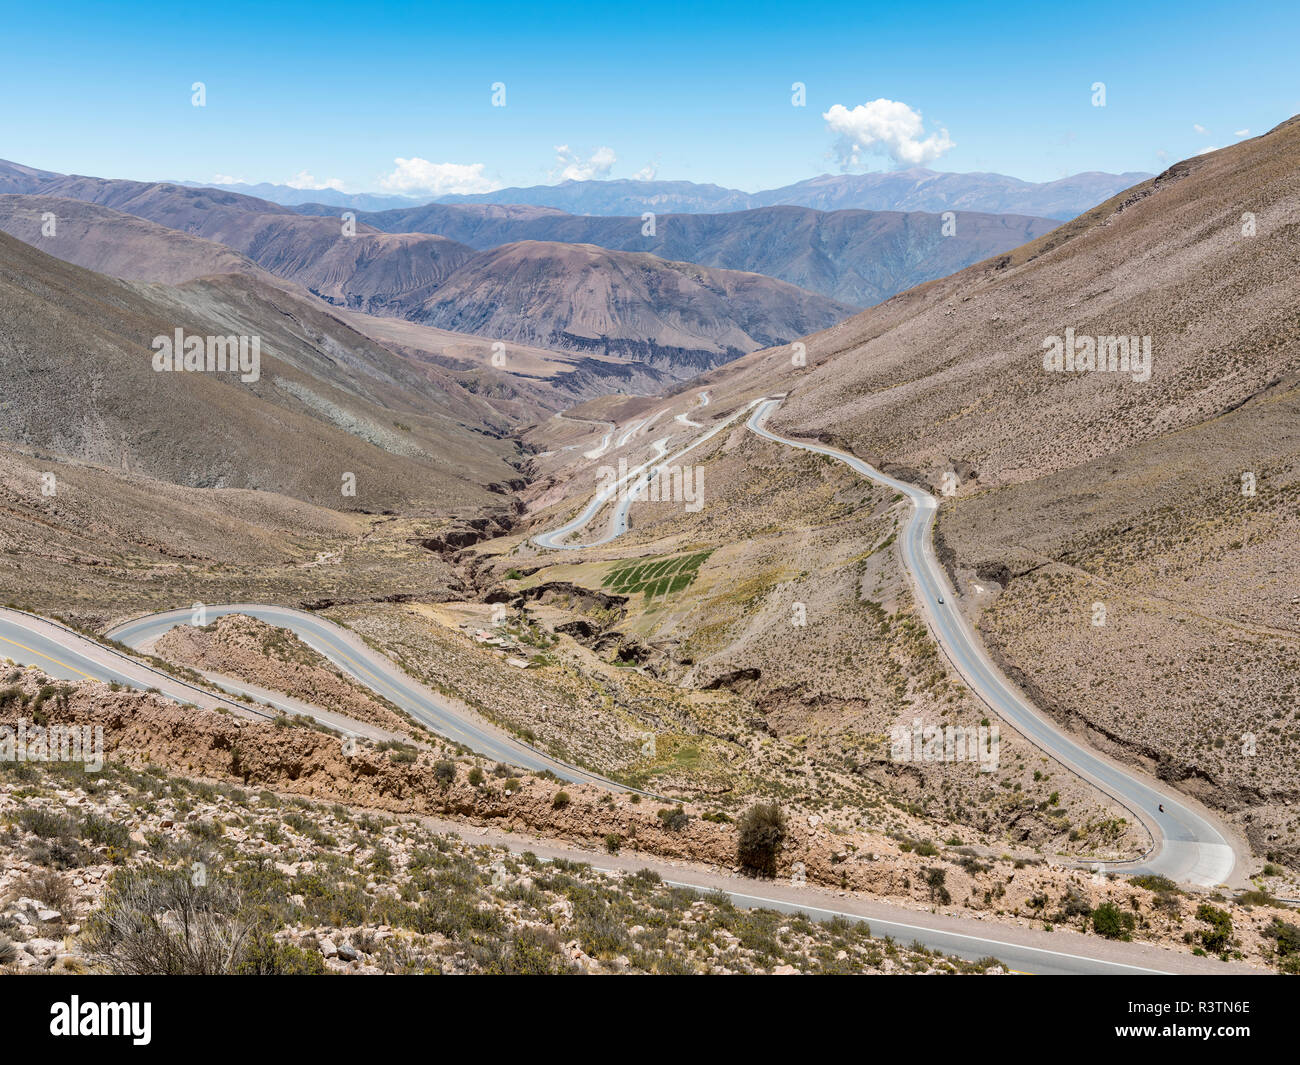 National Road RN 52, the mountain road Cuesta del Lipan climbing up to Abra de Potrerillos. South America, Argentina Stock Photo